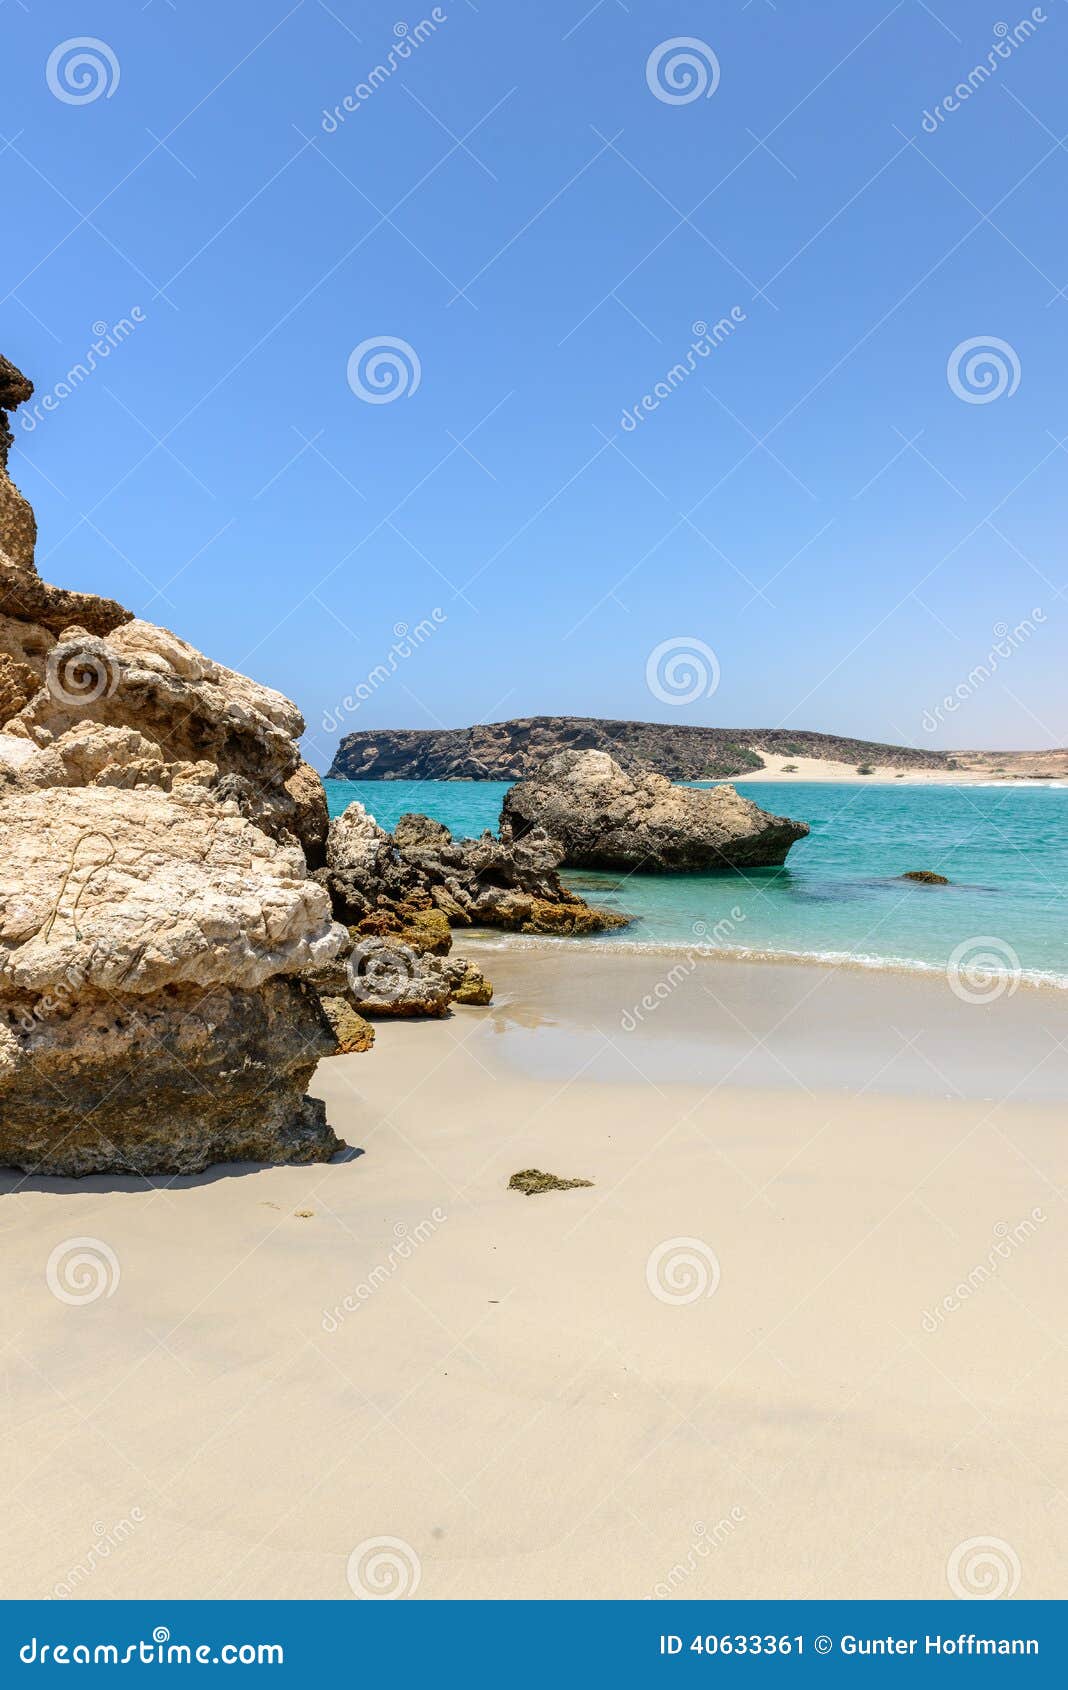 beach at wadi darbat, taqah (oman)